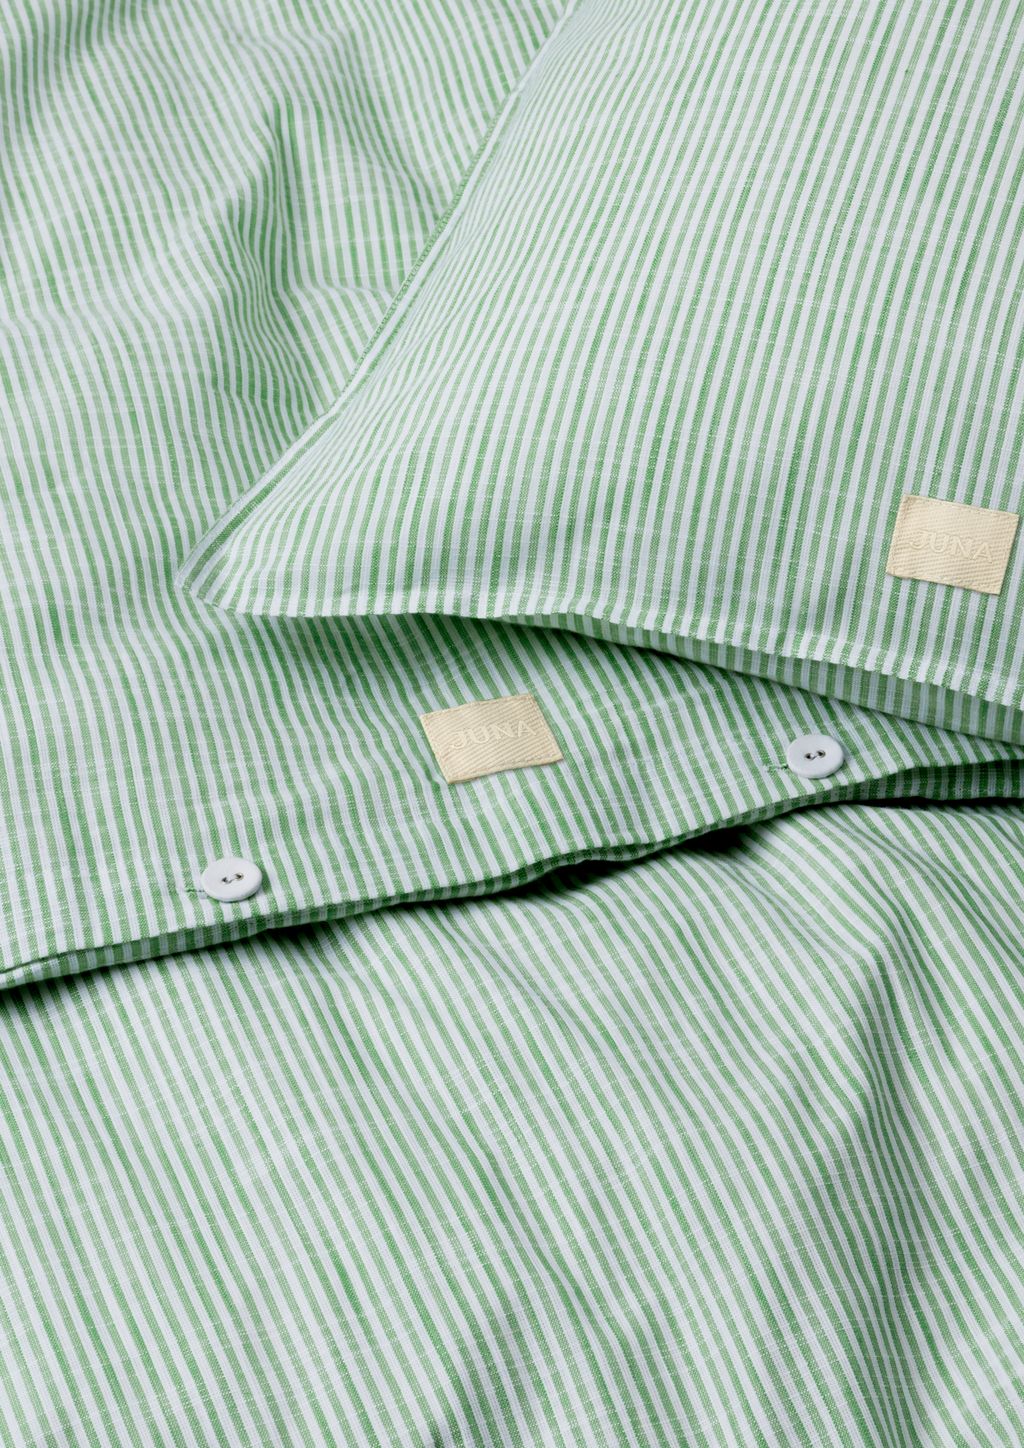 Juna Monochrome lijnen bedden linnen 140 x220 cm, groen/wit